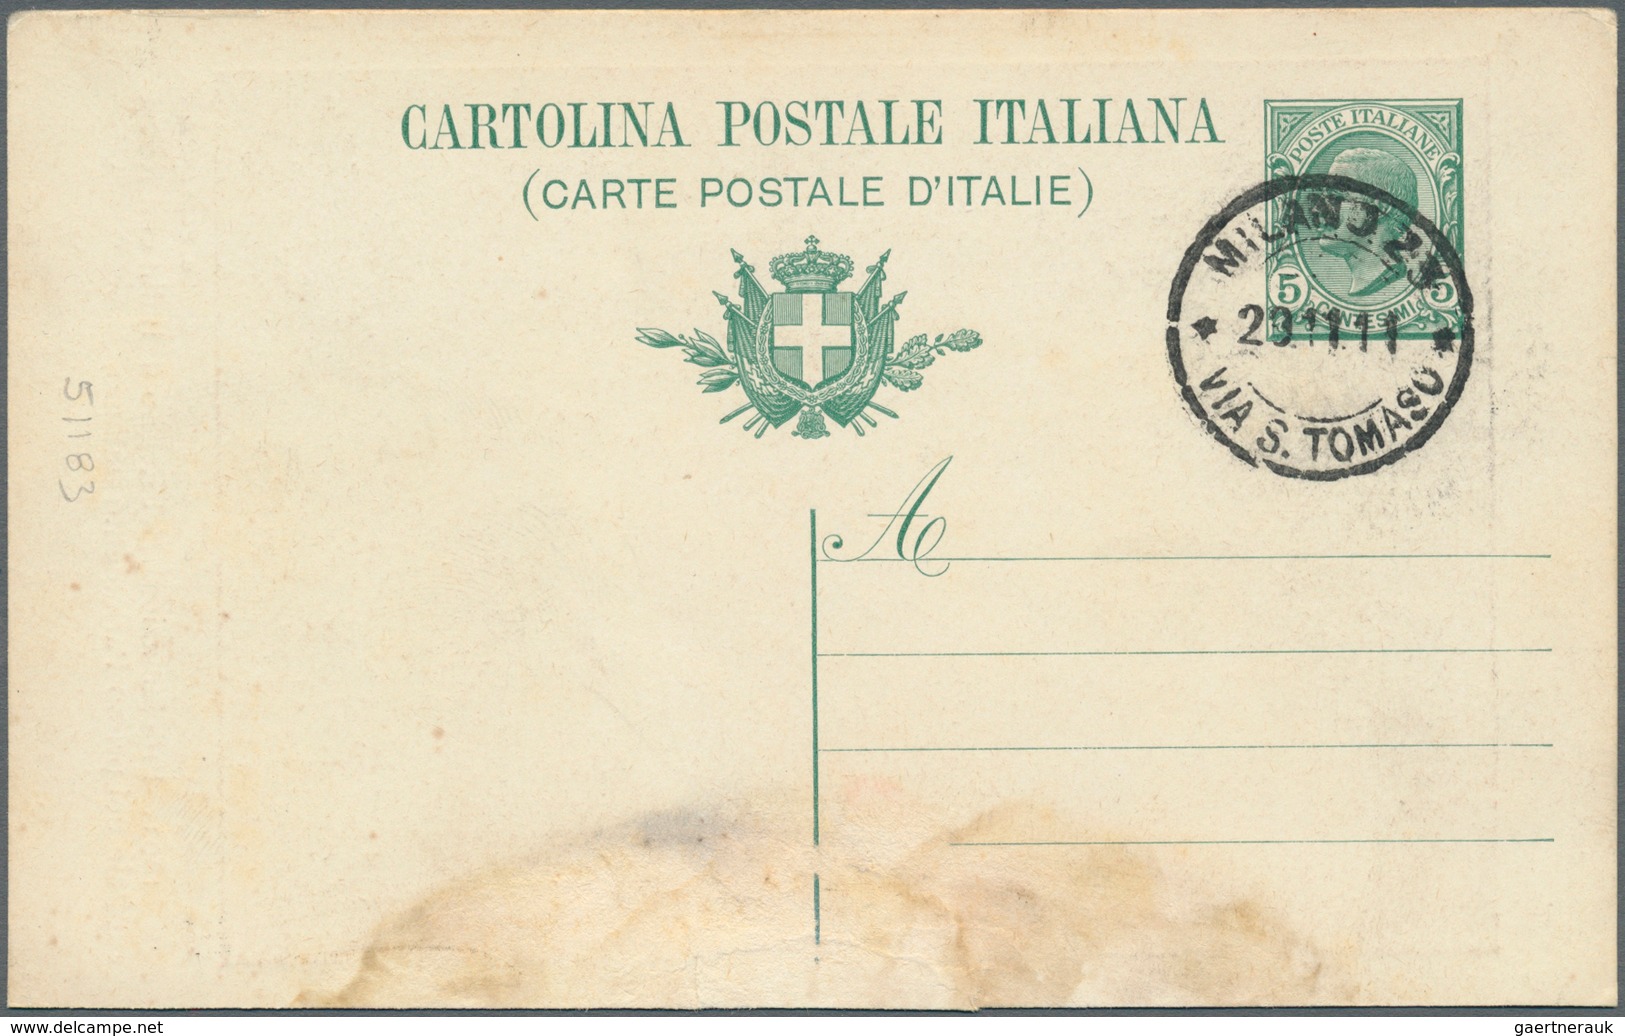 Italien - Stempel: "ROMA CAMERA DEL DEPUTATI" Clear On Two Preprinting Covers 1924 And 1925 (one "Il - Marcophilia